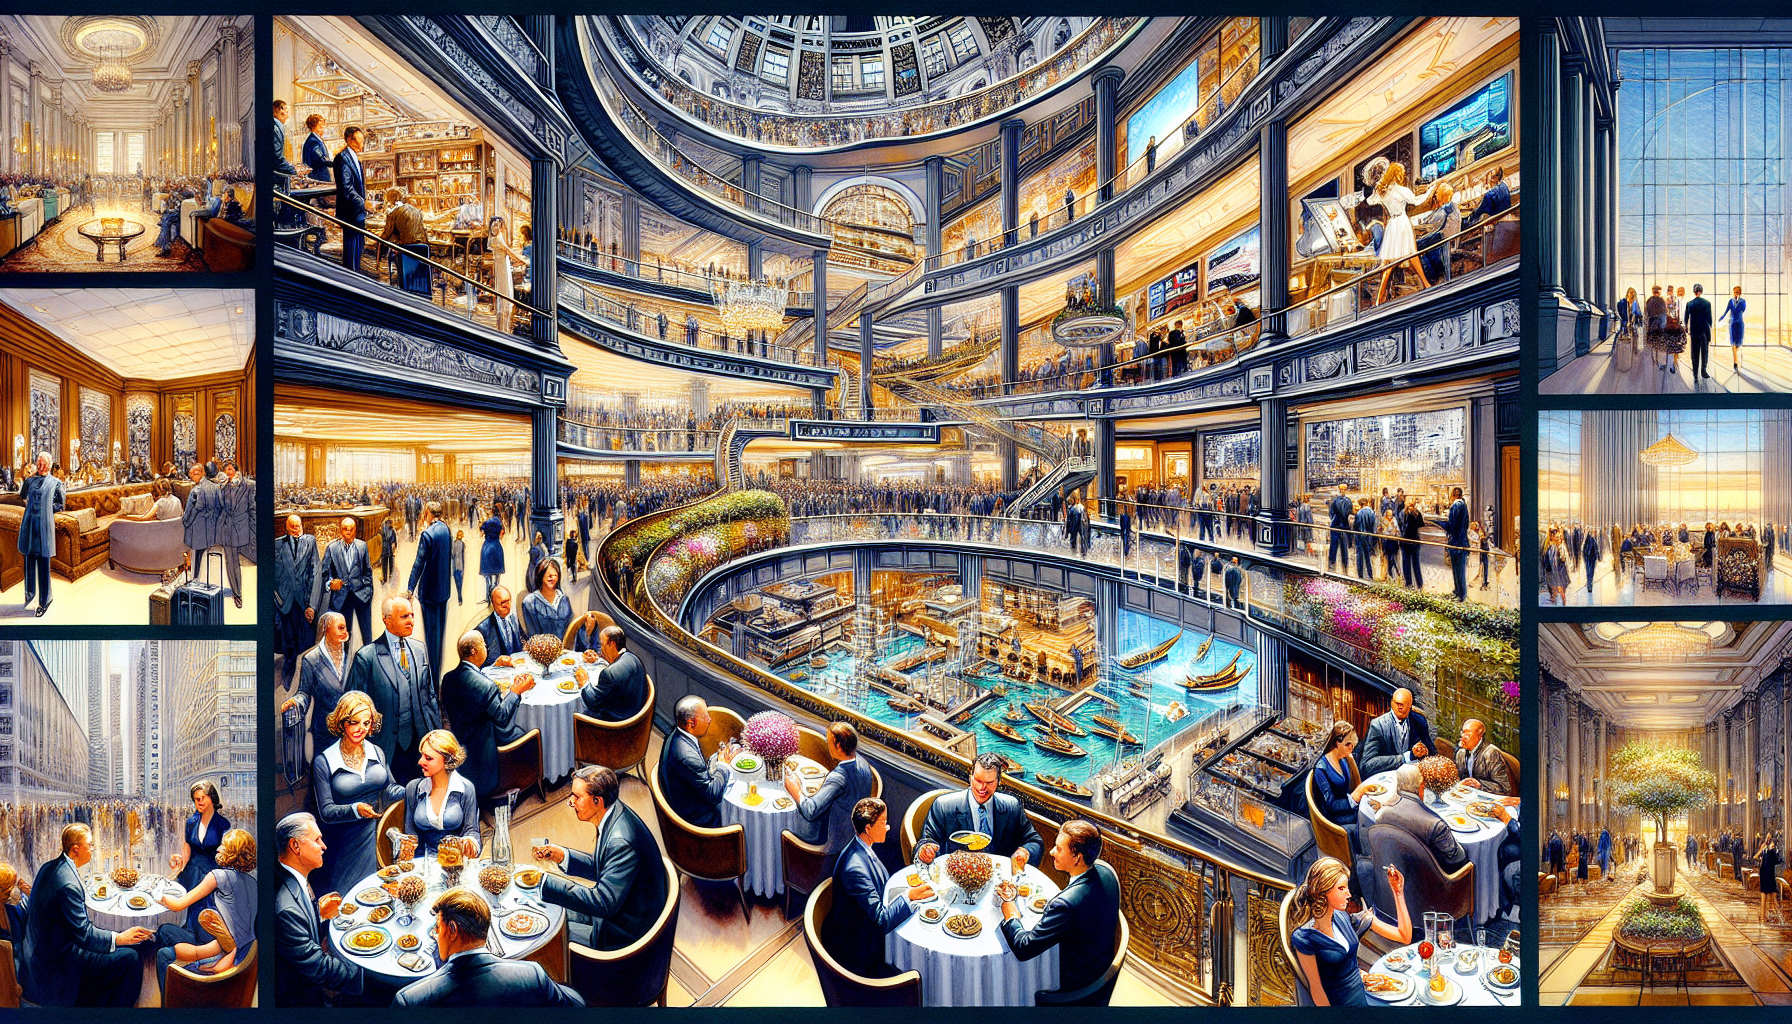 Artistic representation of the unique environment inside the Capital Club